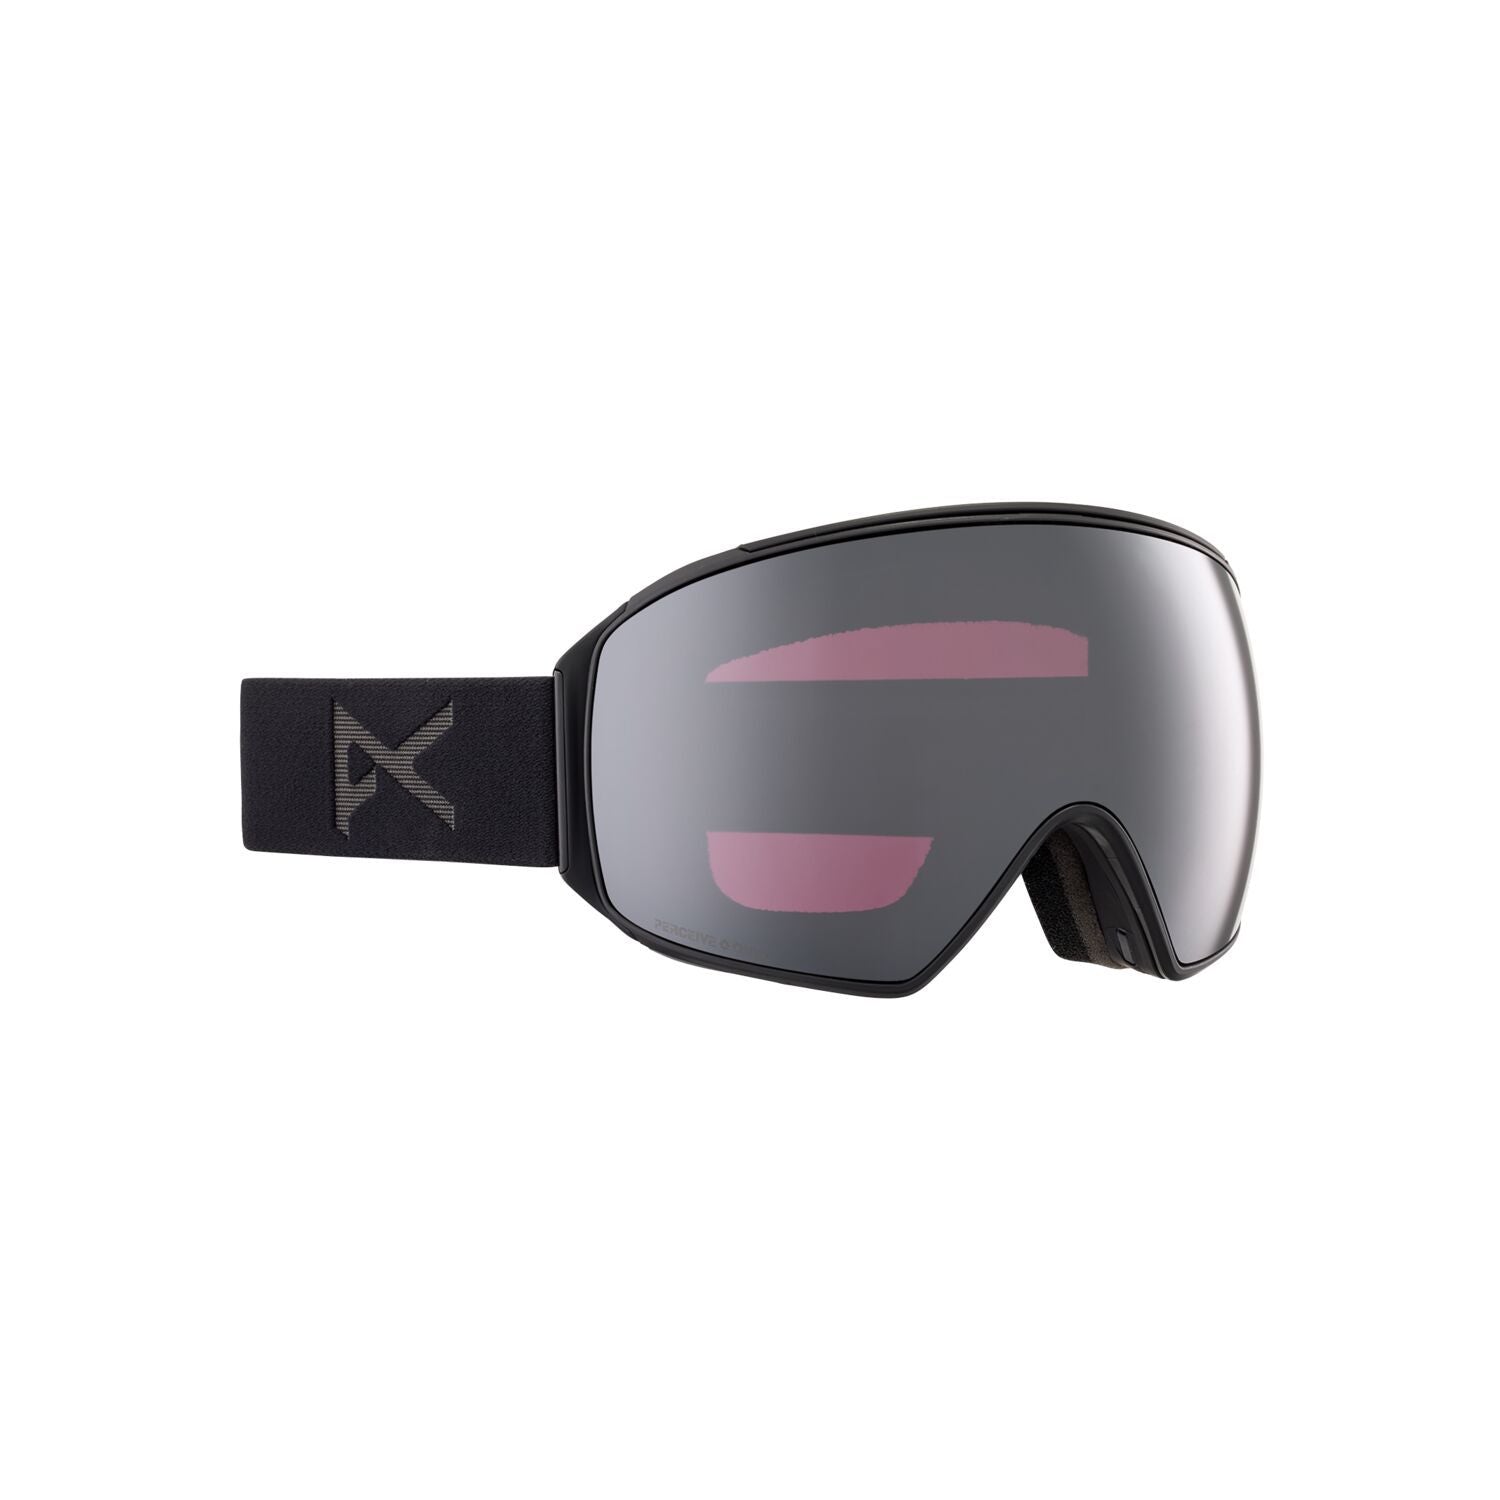 Anon M4 Toric Goggles + Bonus Lens + MFI Face Mask - Low Bridge Fit Smoke / Perceive Sunny Onyx Snow Goggles